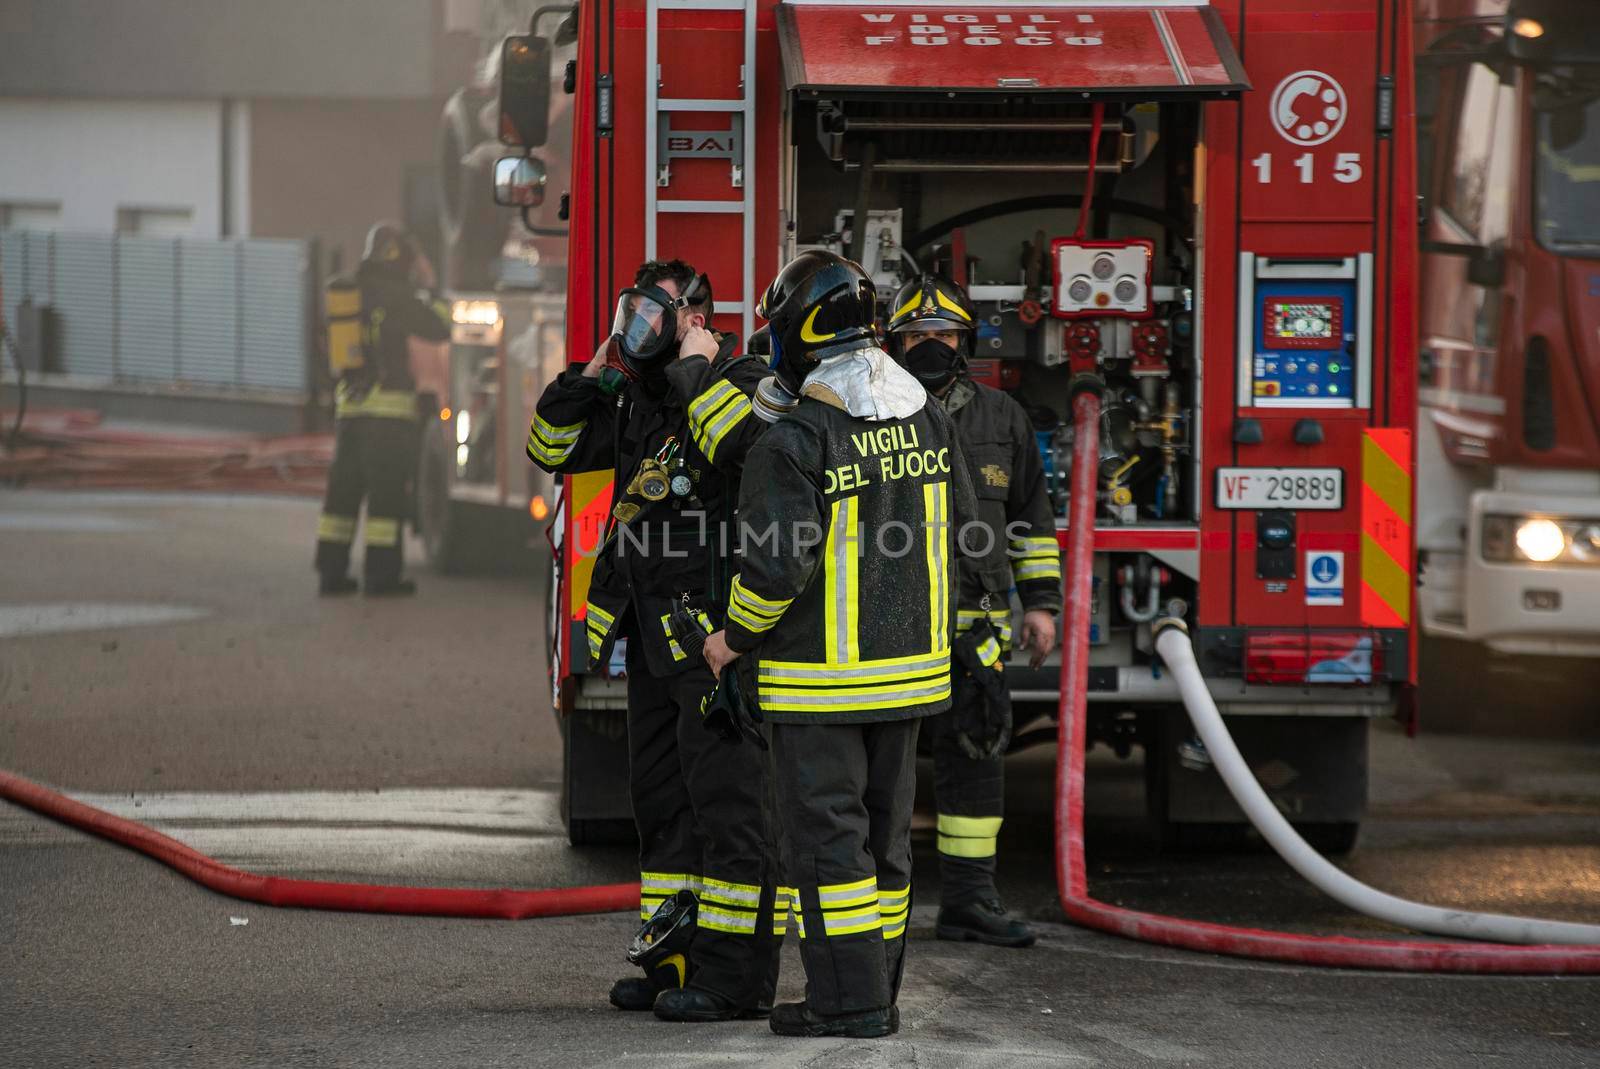 VILLANOVA DEL GHEBBO, ITALY 23 MARCH 2021: Firefighters detail at work